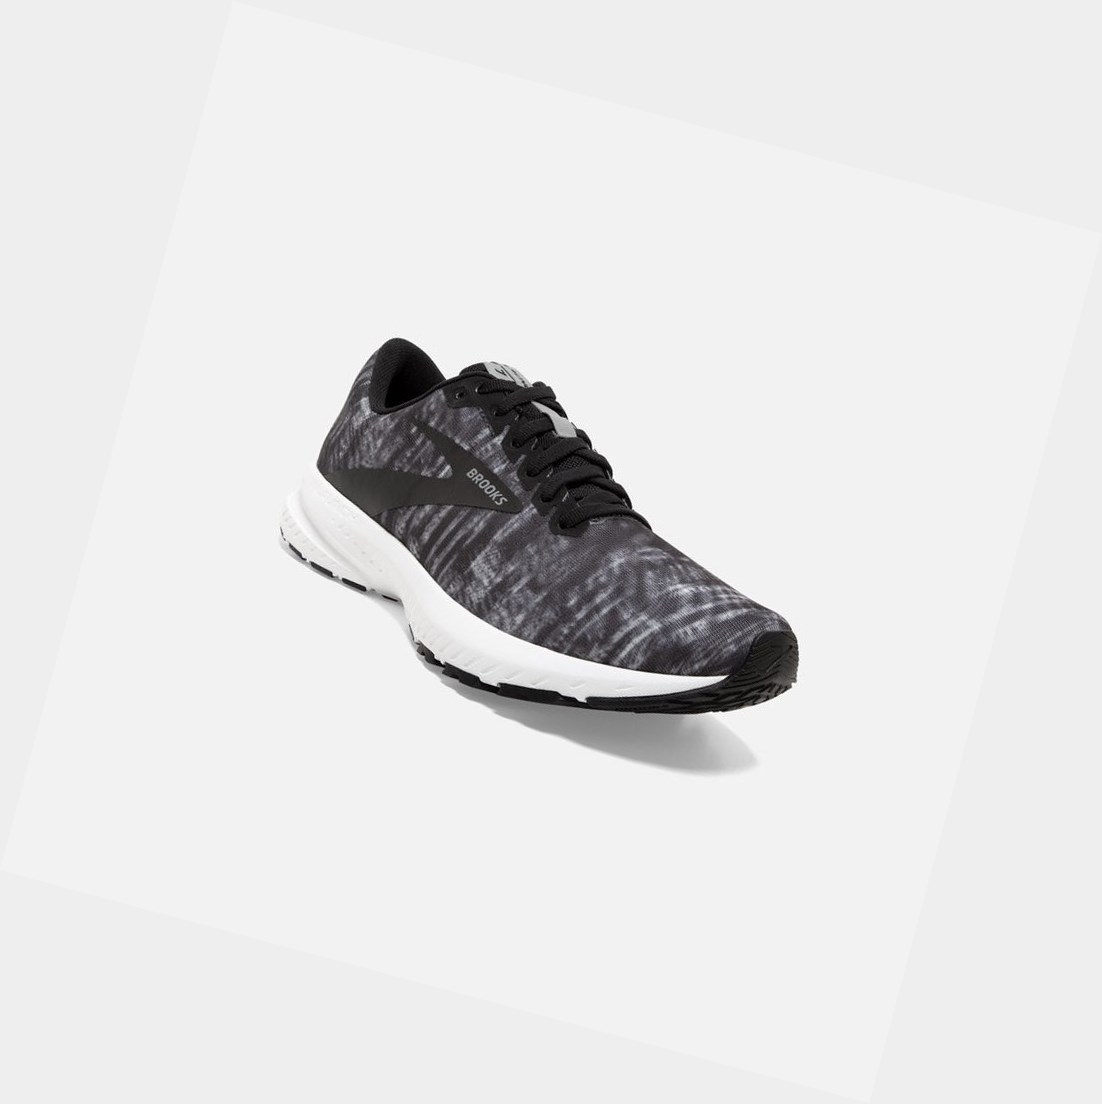 Brooks Launch 7 Women's Road Running Shoes Marble Black / Grey / White | KRUF-13987